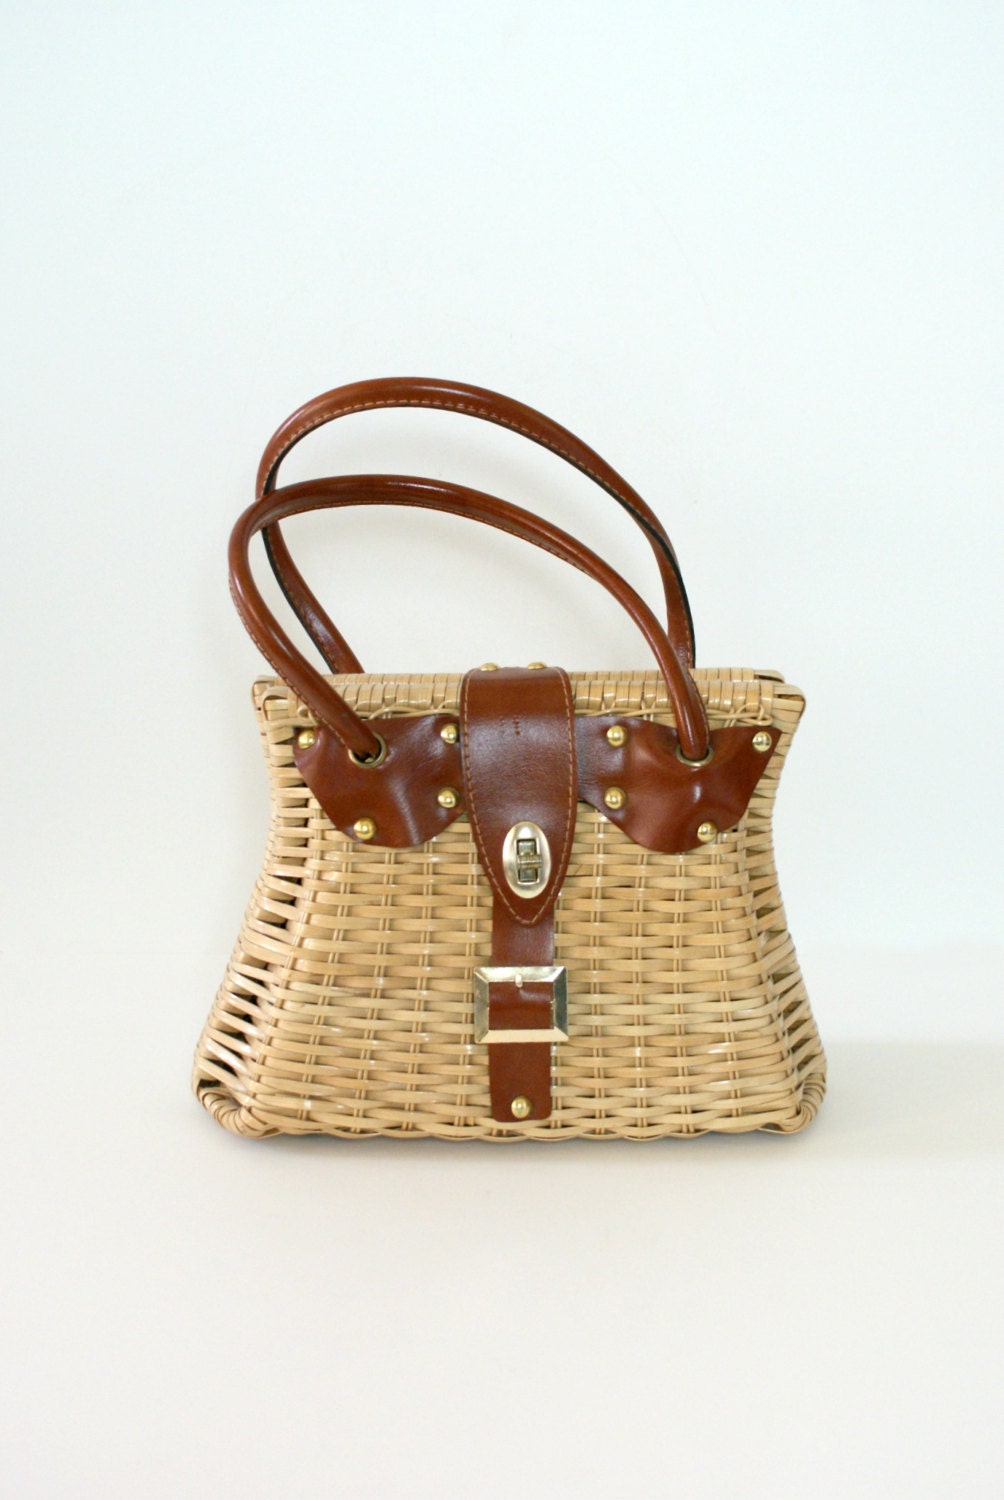 Woven Straw Handbags For Summer | IUCN Water